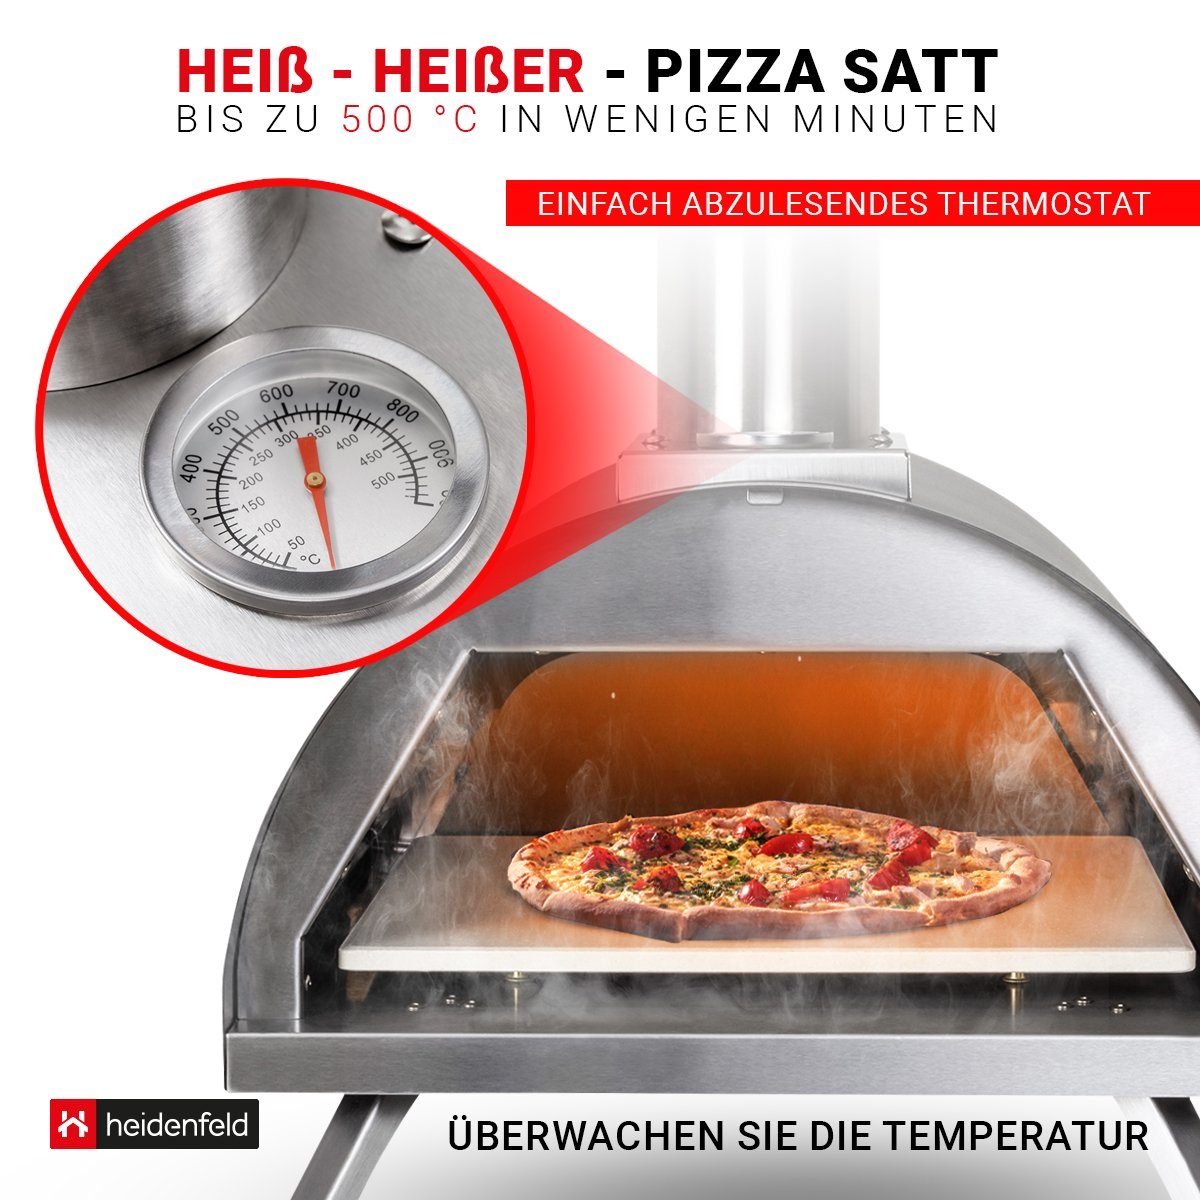 Pizzaofen Hybrid Holzofen - Pellets Gasgril - Heidenfeld Neapel Pizza - 2in1 Ofen Backofen - Pizzastein inkl. 500°C, Edelstahl bis oder Sichtfenster